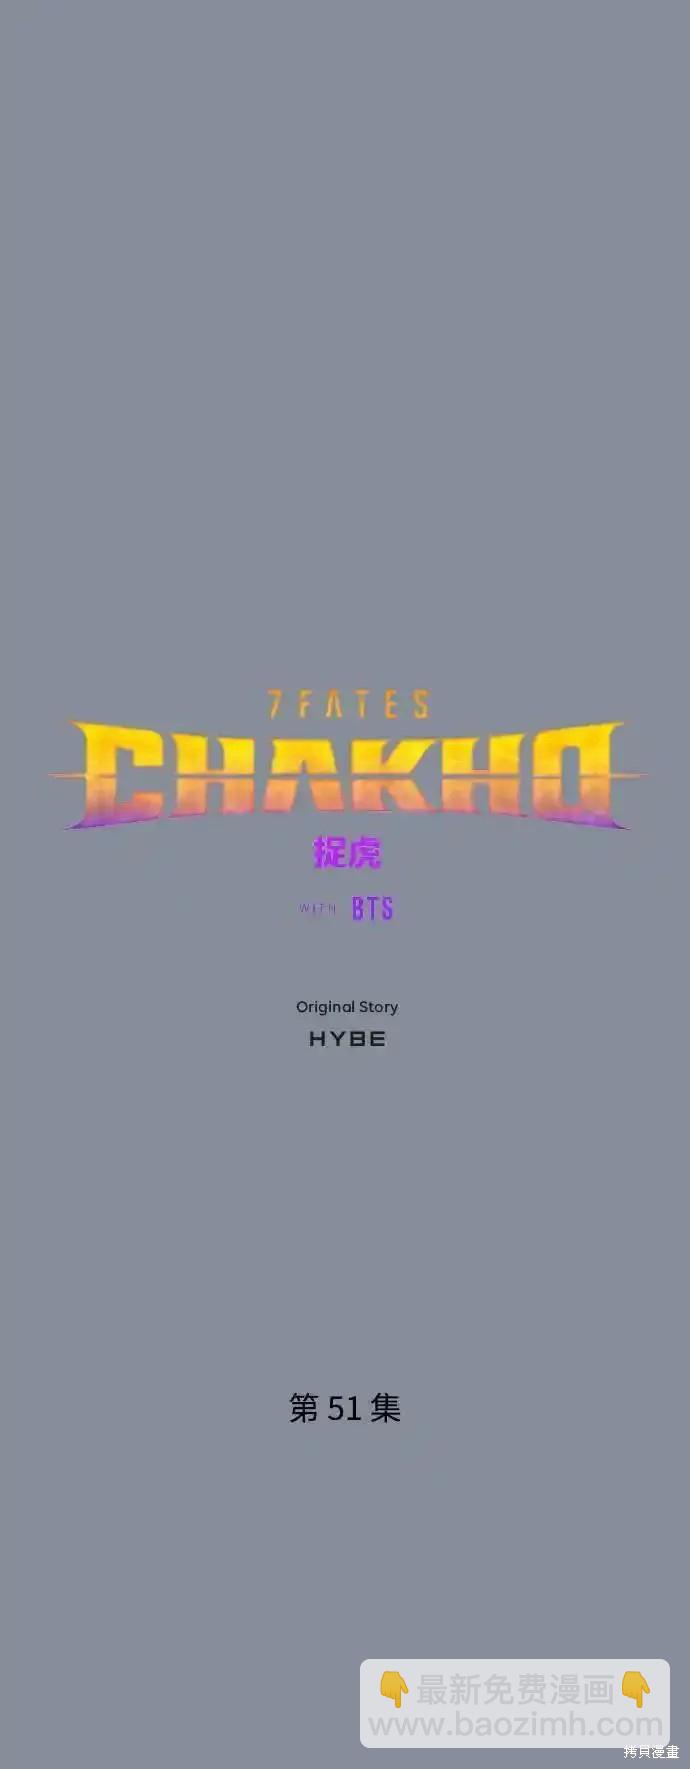 7FATES CHAKHO - 第51話(1/2) - 7